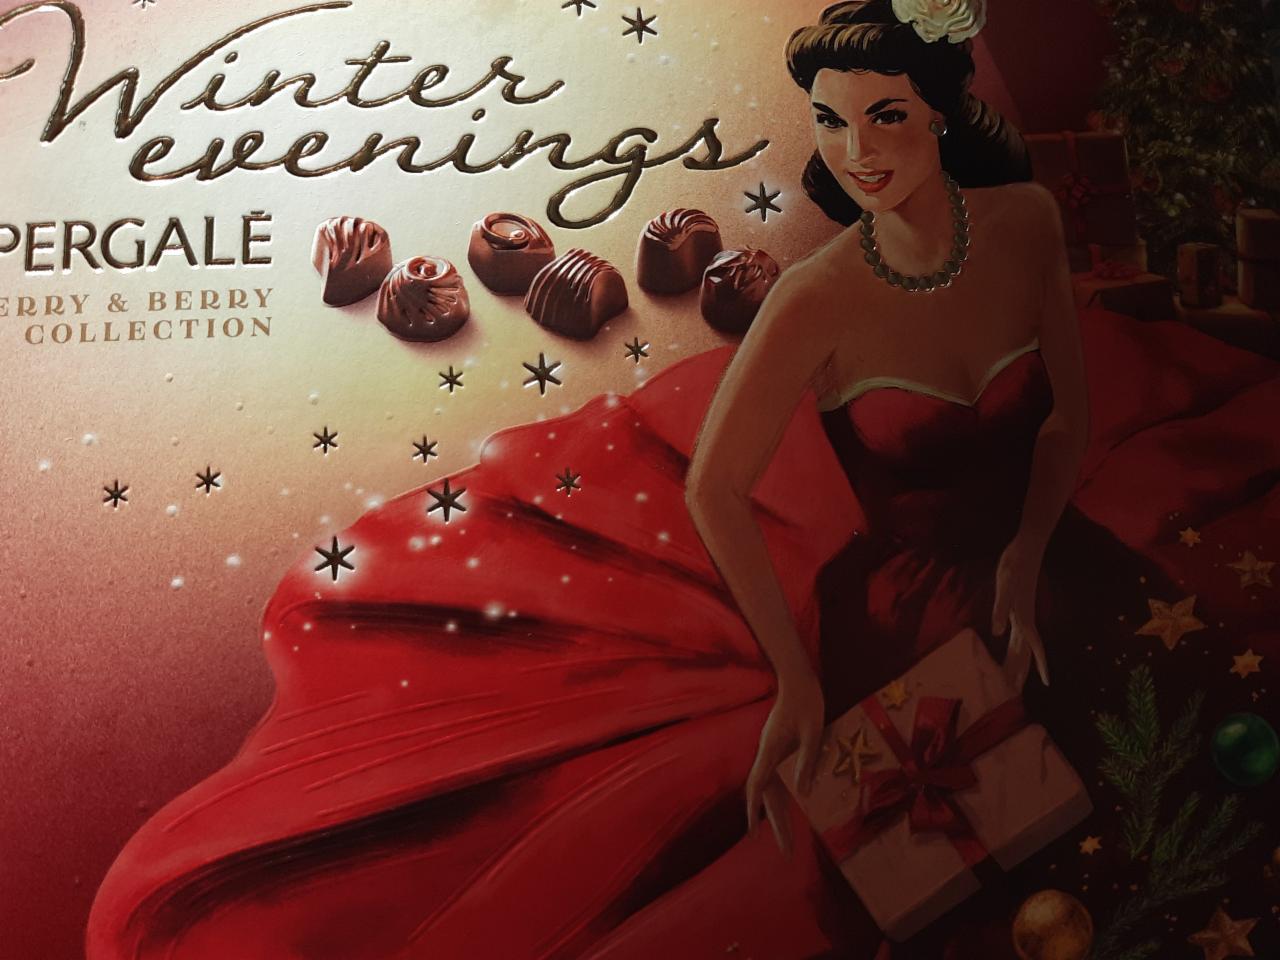 Фото - набор шоколадных конфет winter evenings cherry berry collection Pergale